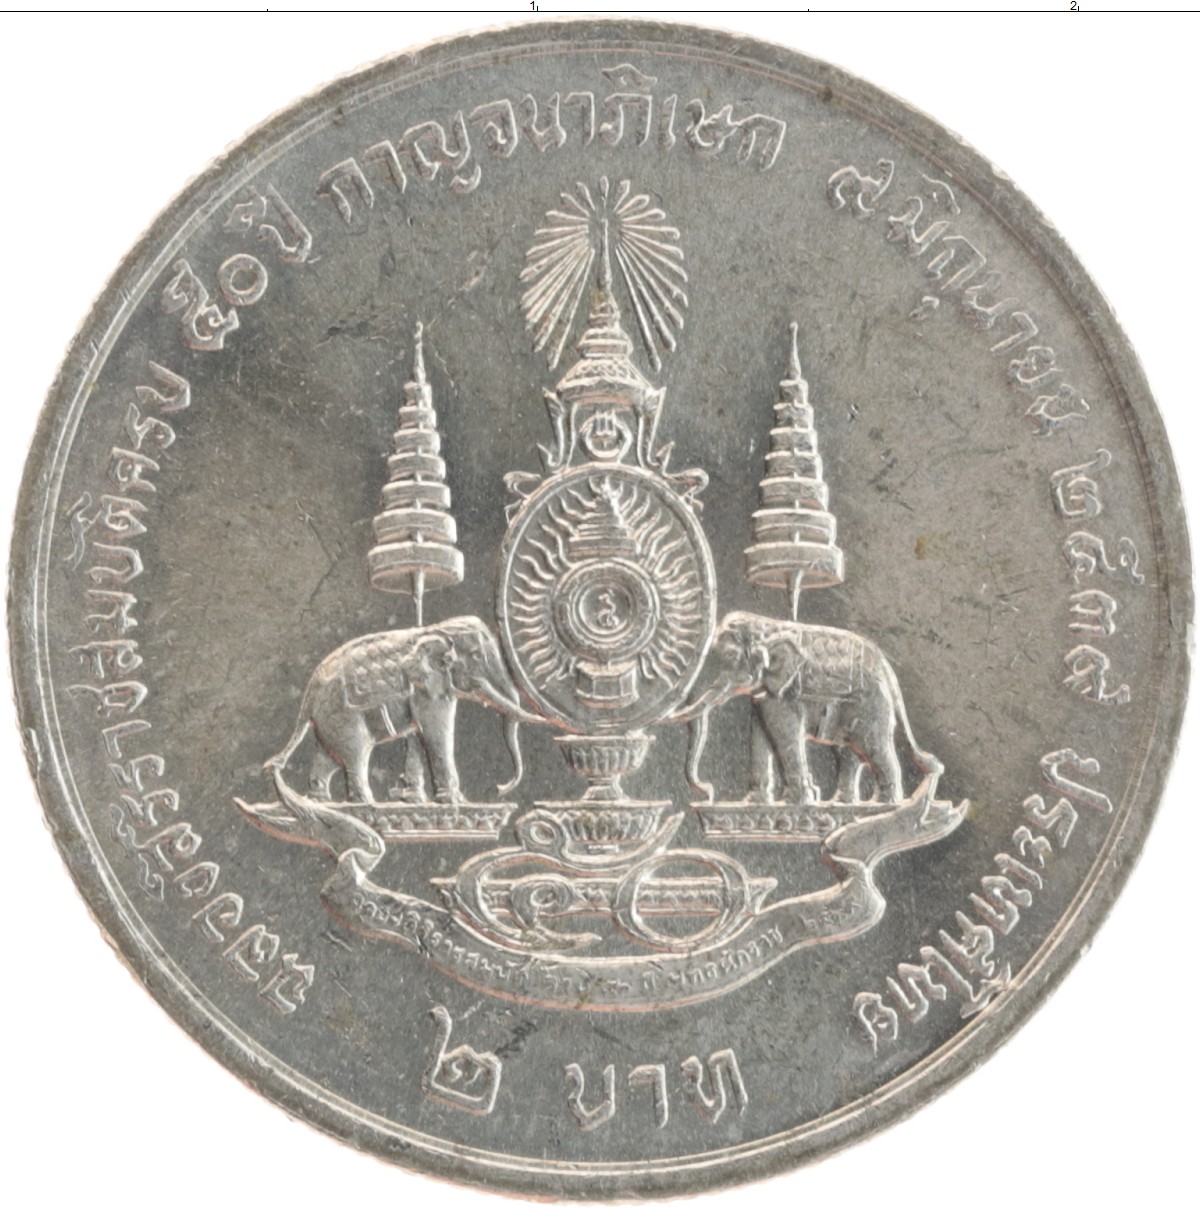 5 батов в рублях. Таиландский бат монета. Монеты Таиланда 1 бат. Монета Таиланд 1 бат 1996. Валюта Тайланда монеты 1 бат.